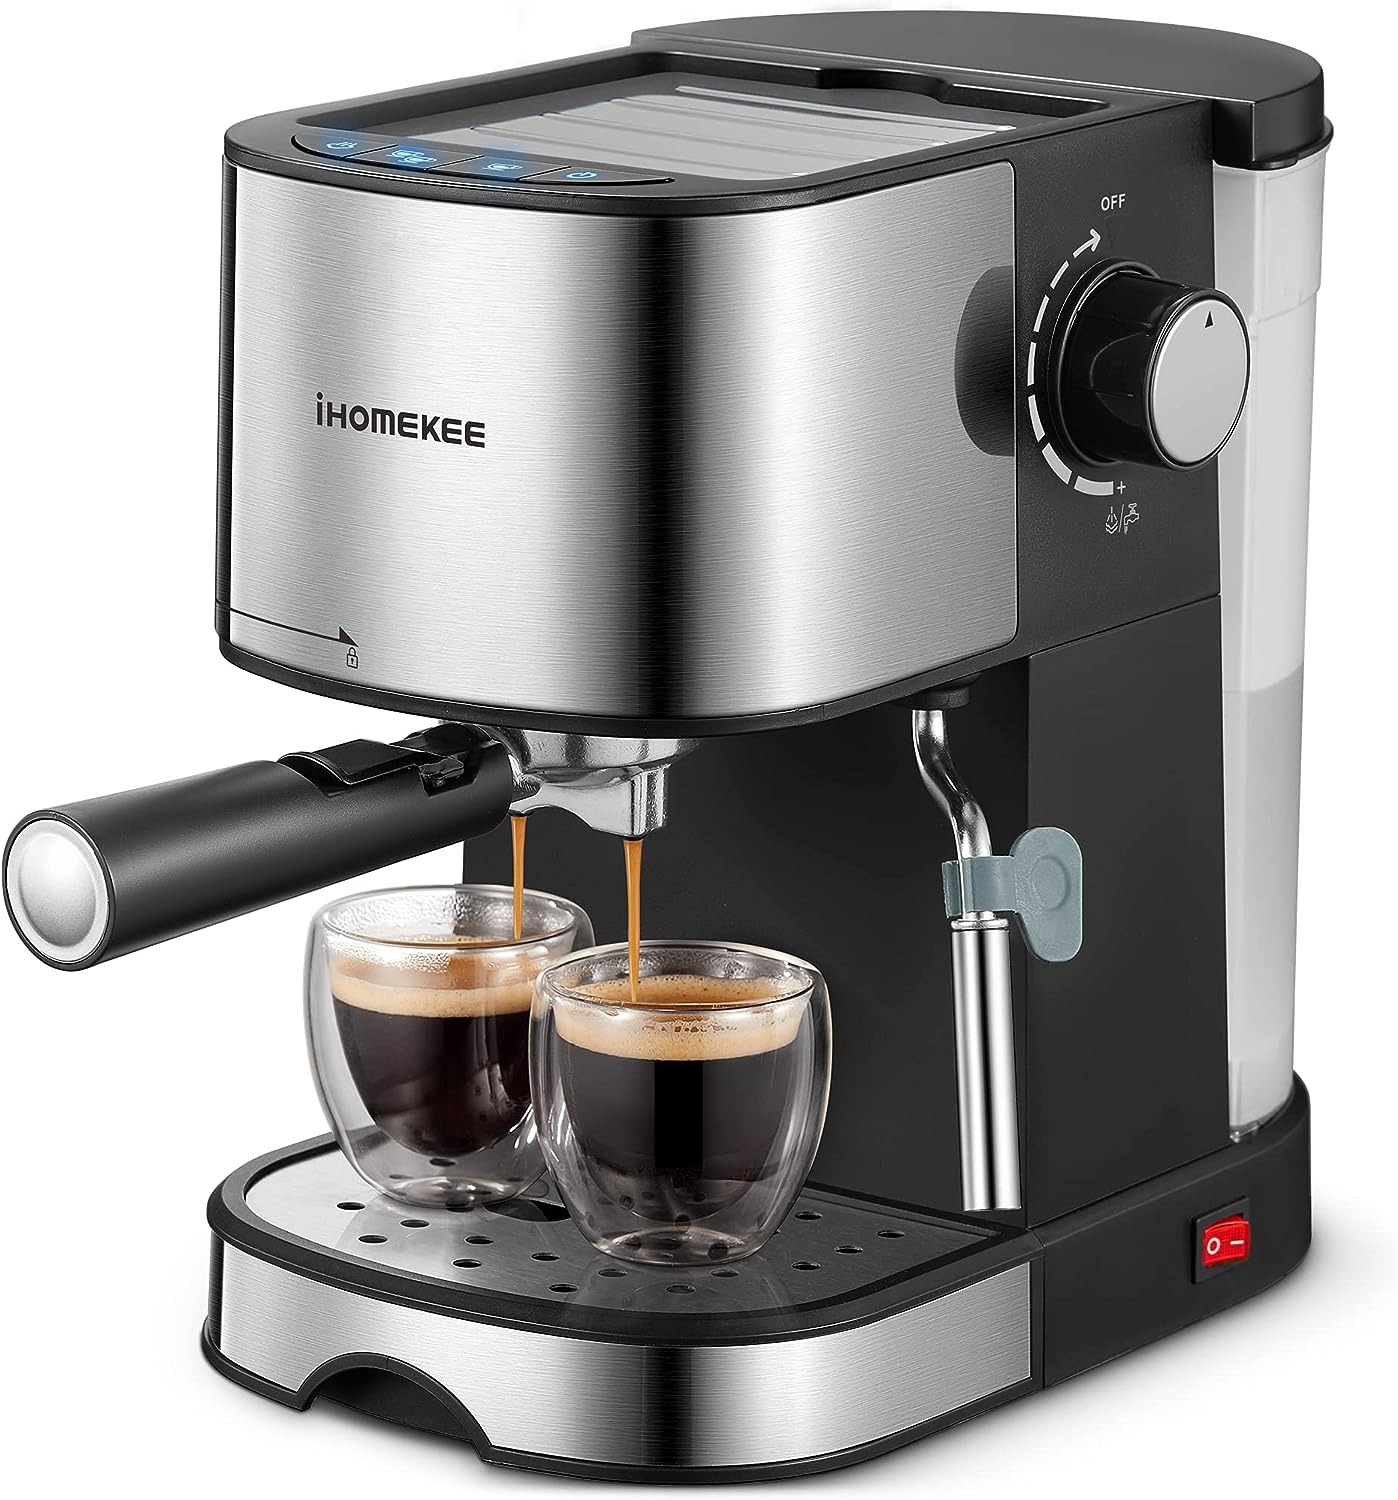 Ihomekee Espresso Machine 15 Bar Pump Pressure, Espresso and